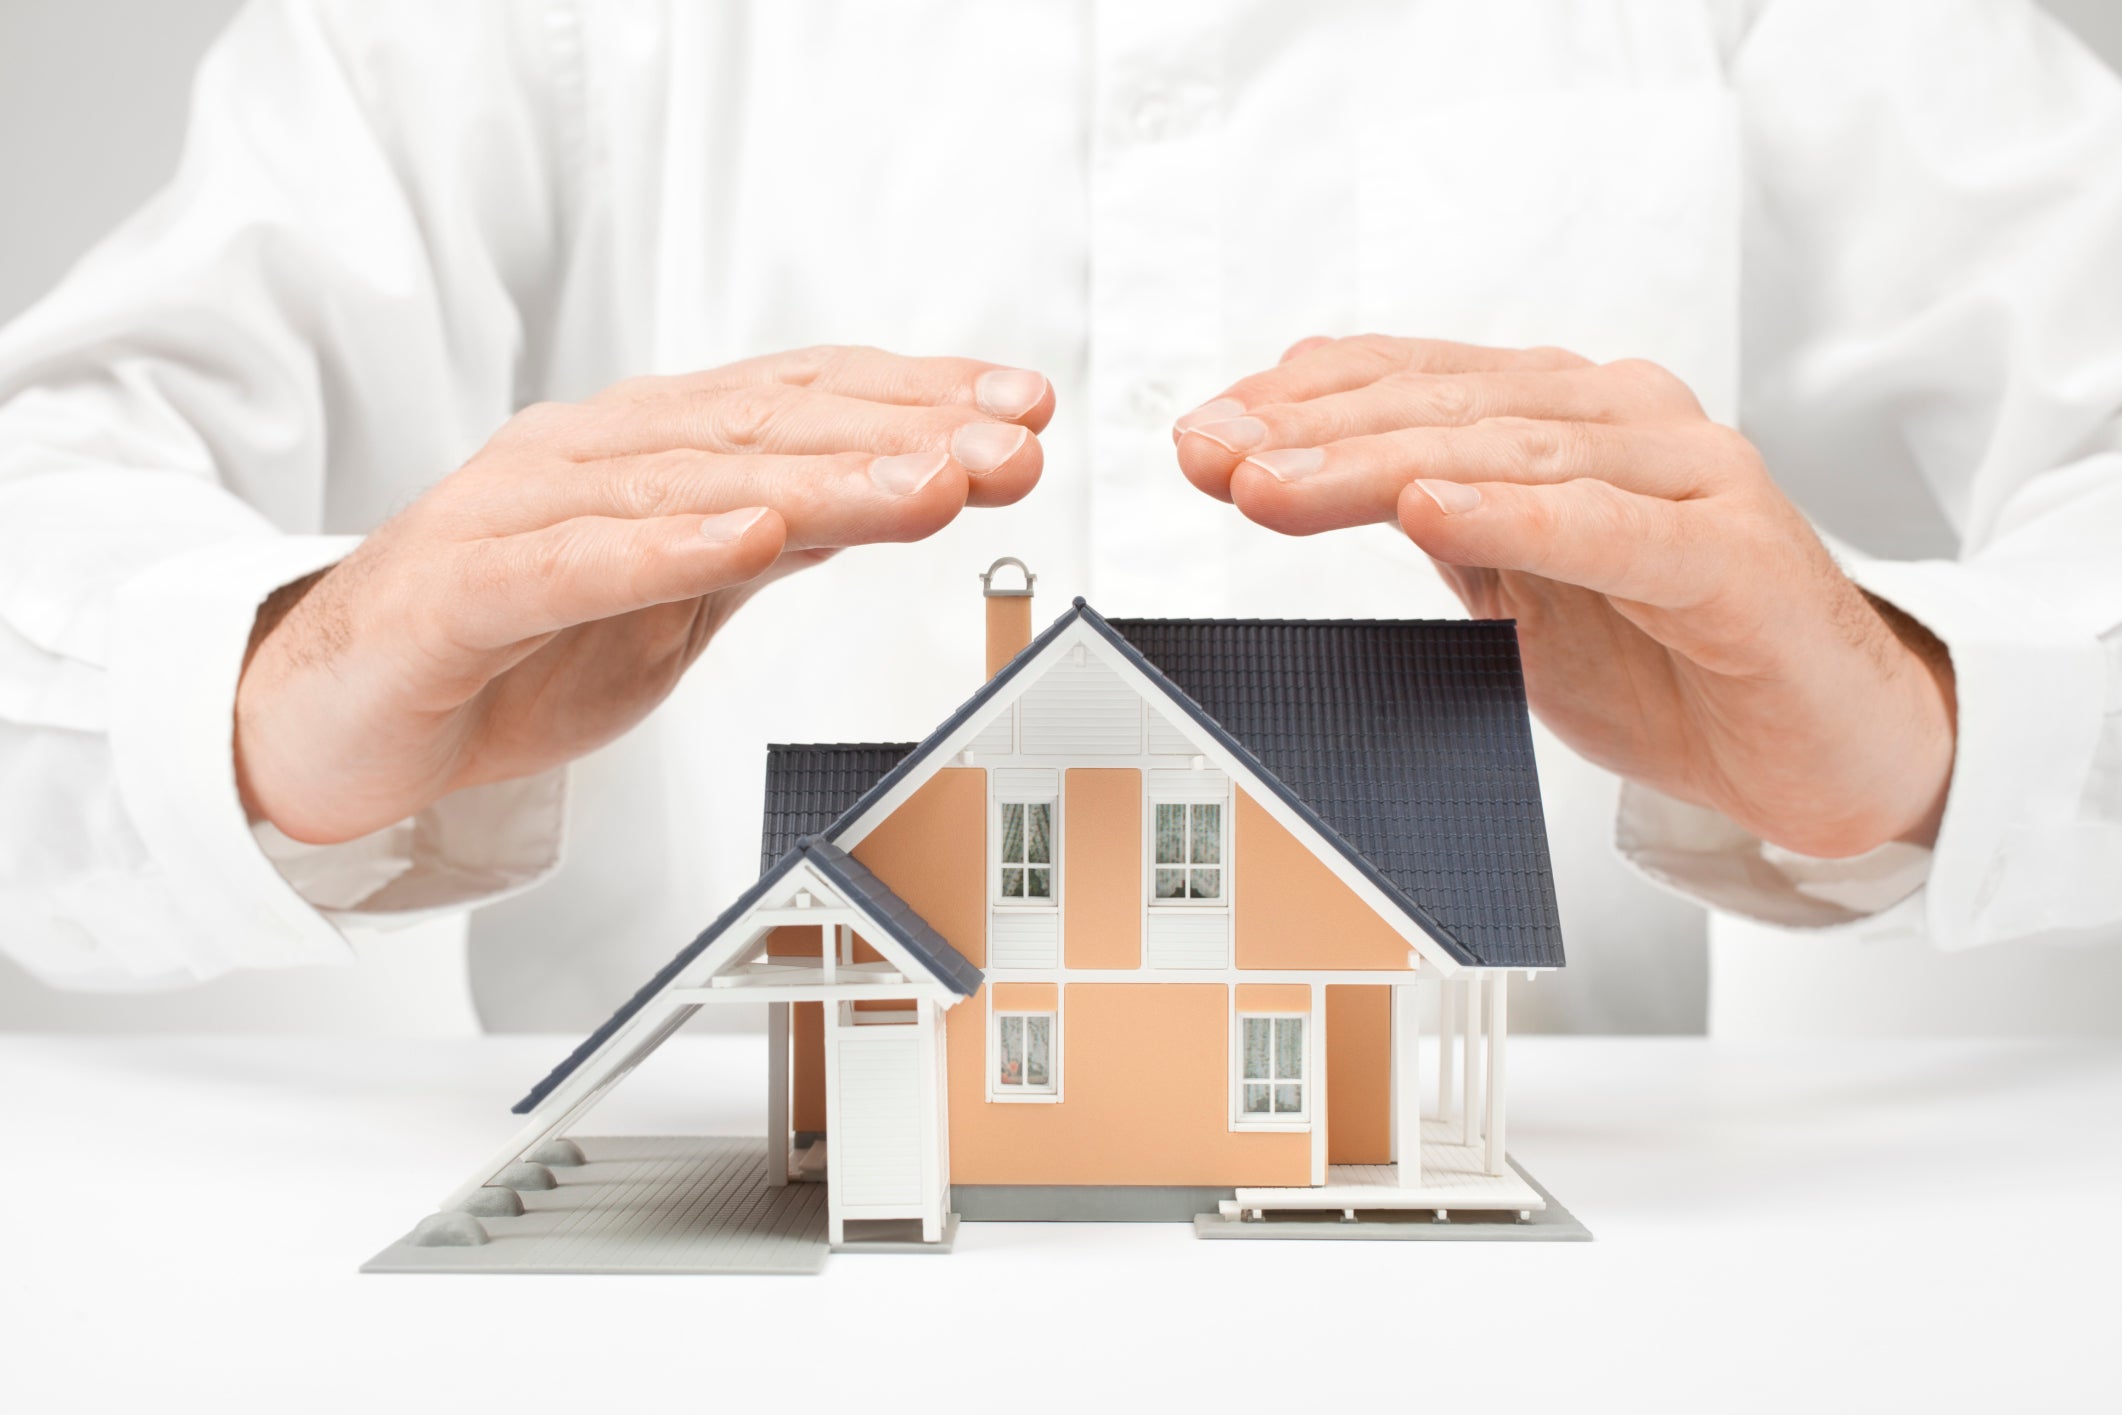 Homeowner's Insurance: Cut Your Premium in Half